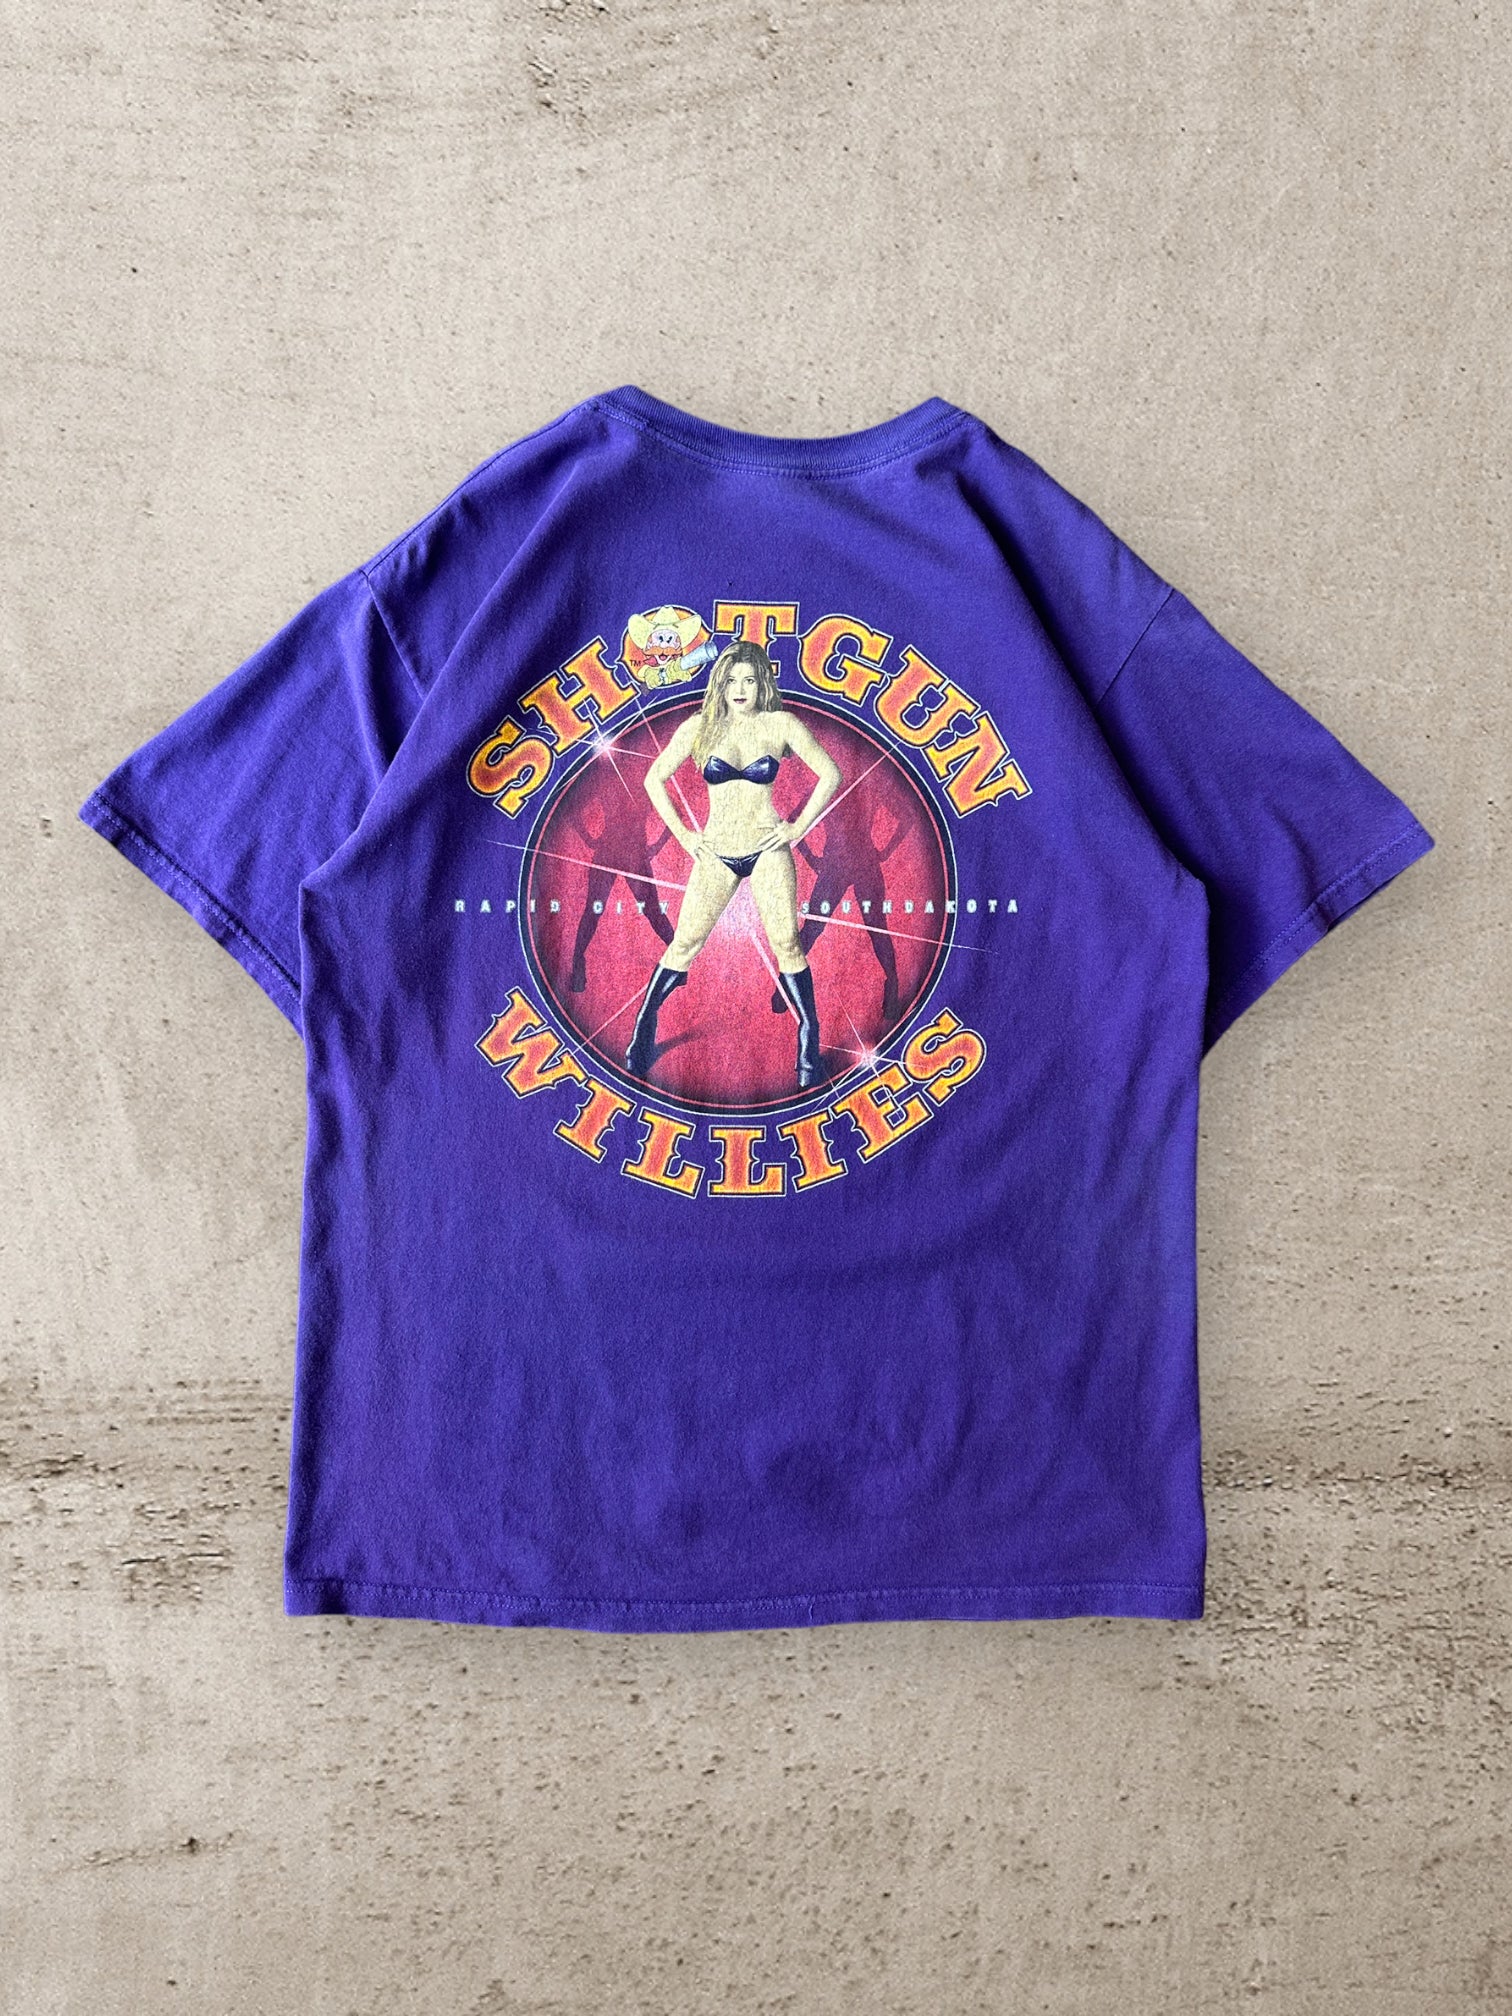 00s Shotgun Willies Graphic T-Shirt - Large